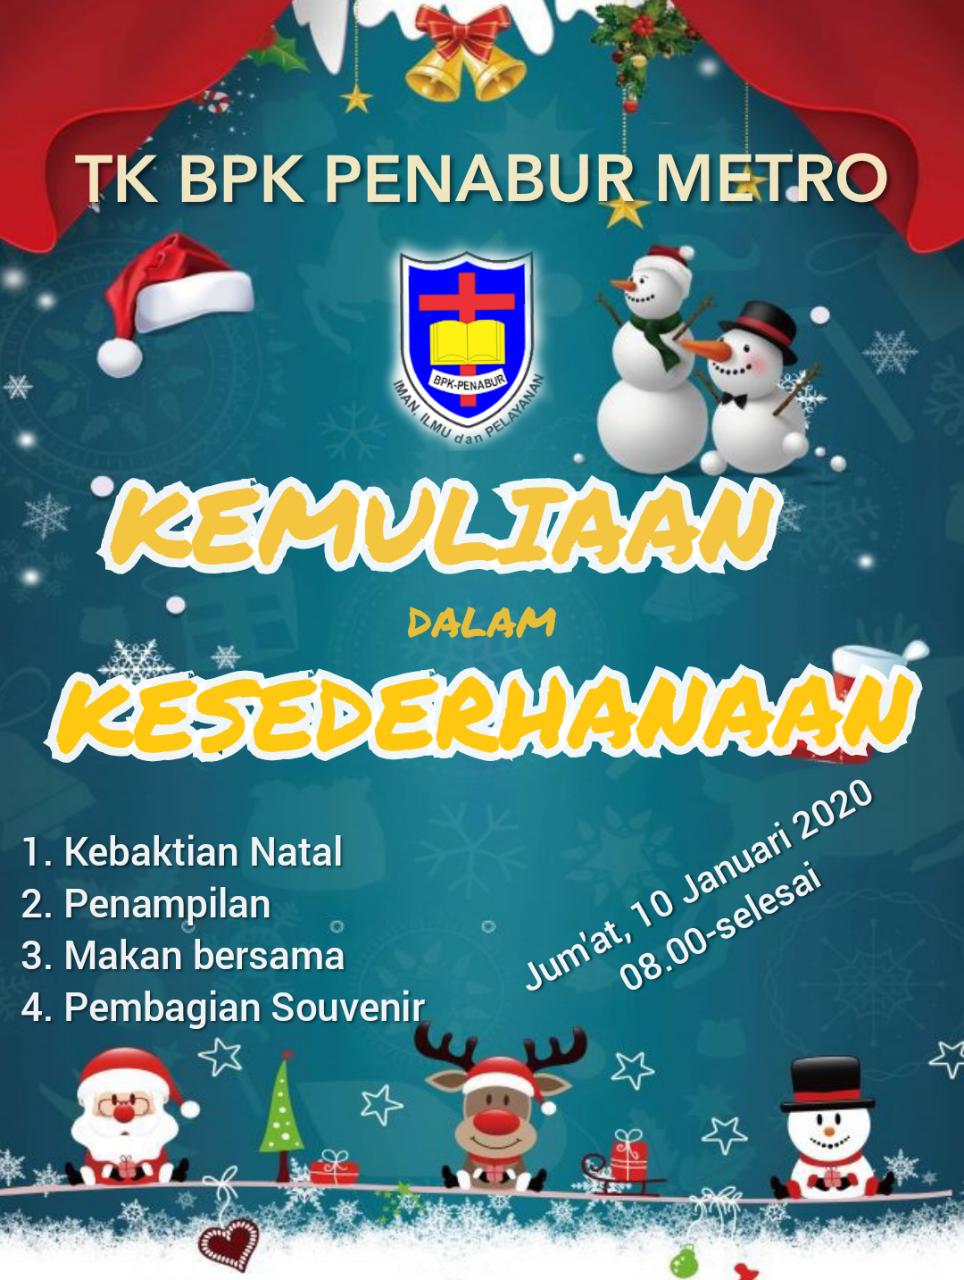 Natal TKK BPK Penabur Metro